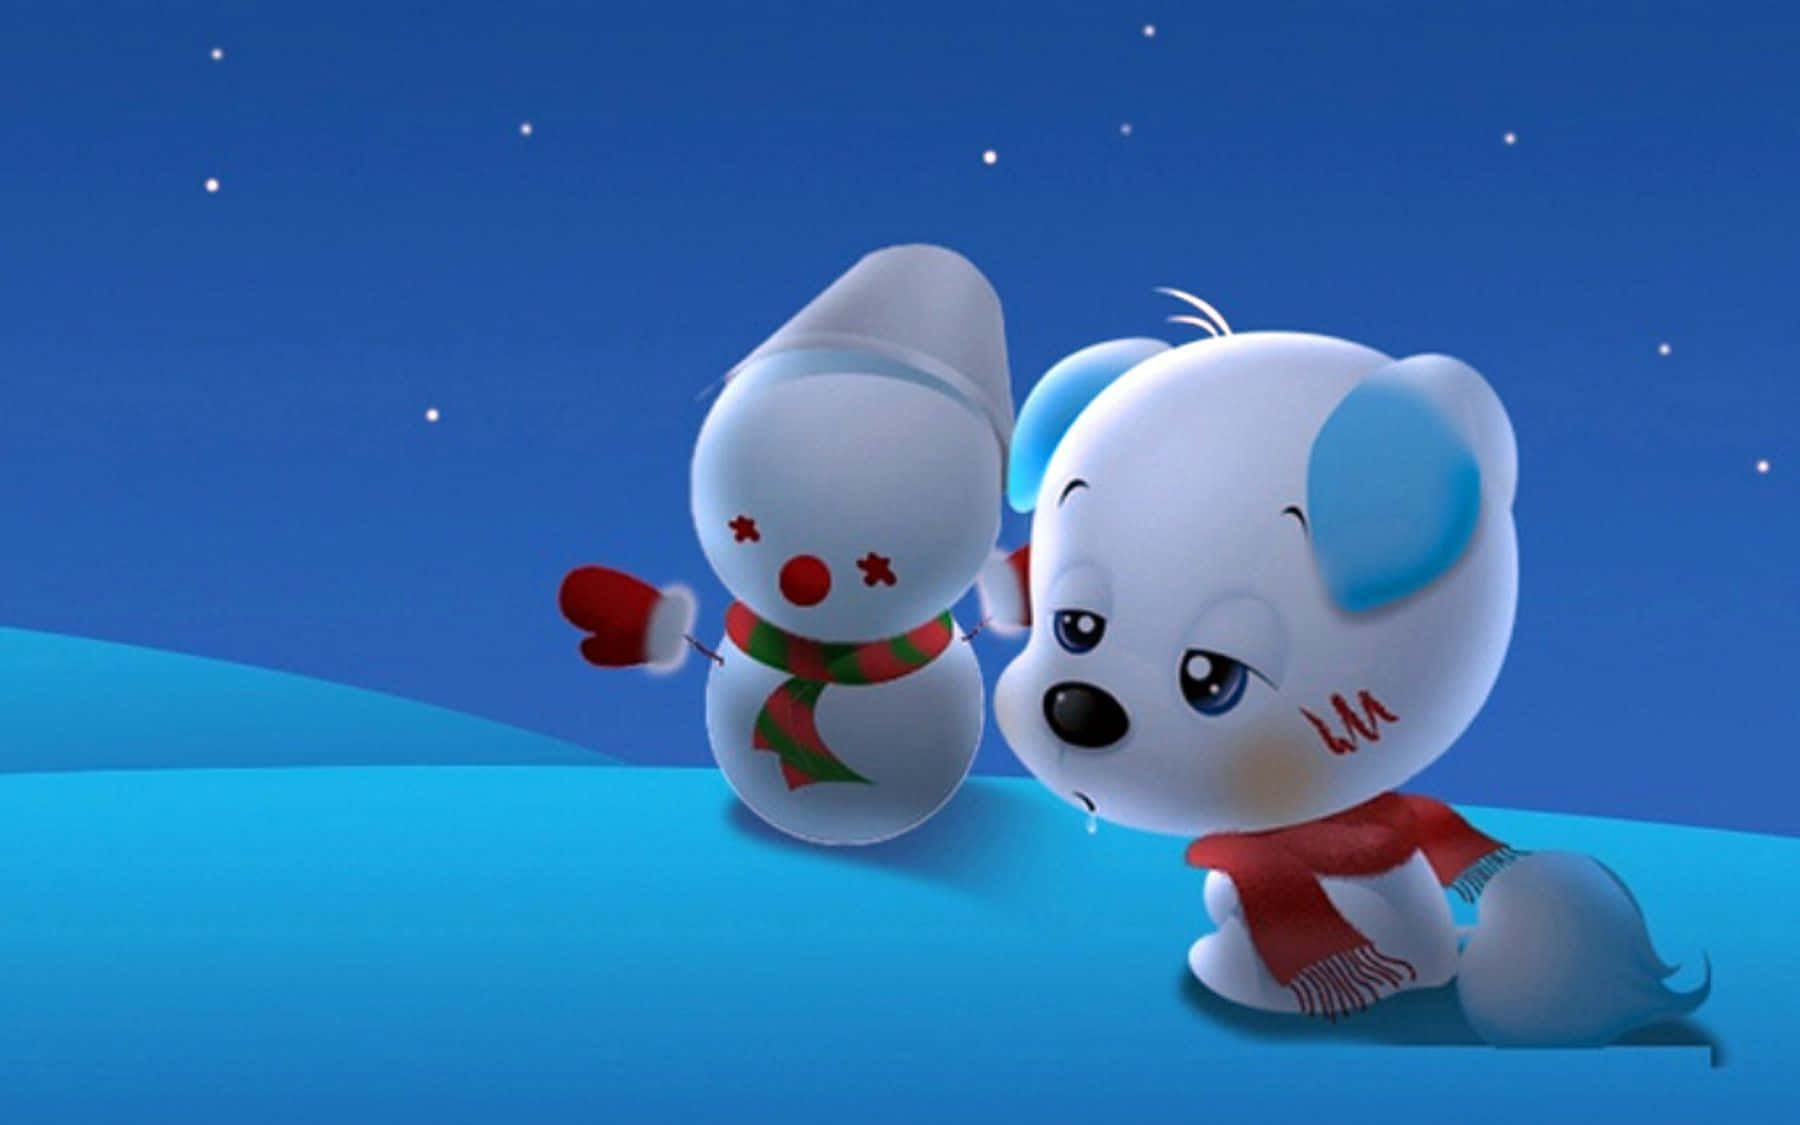 Dog Cute Cartoon Animals And Snowmanpicture